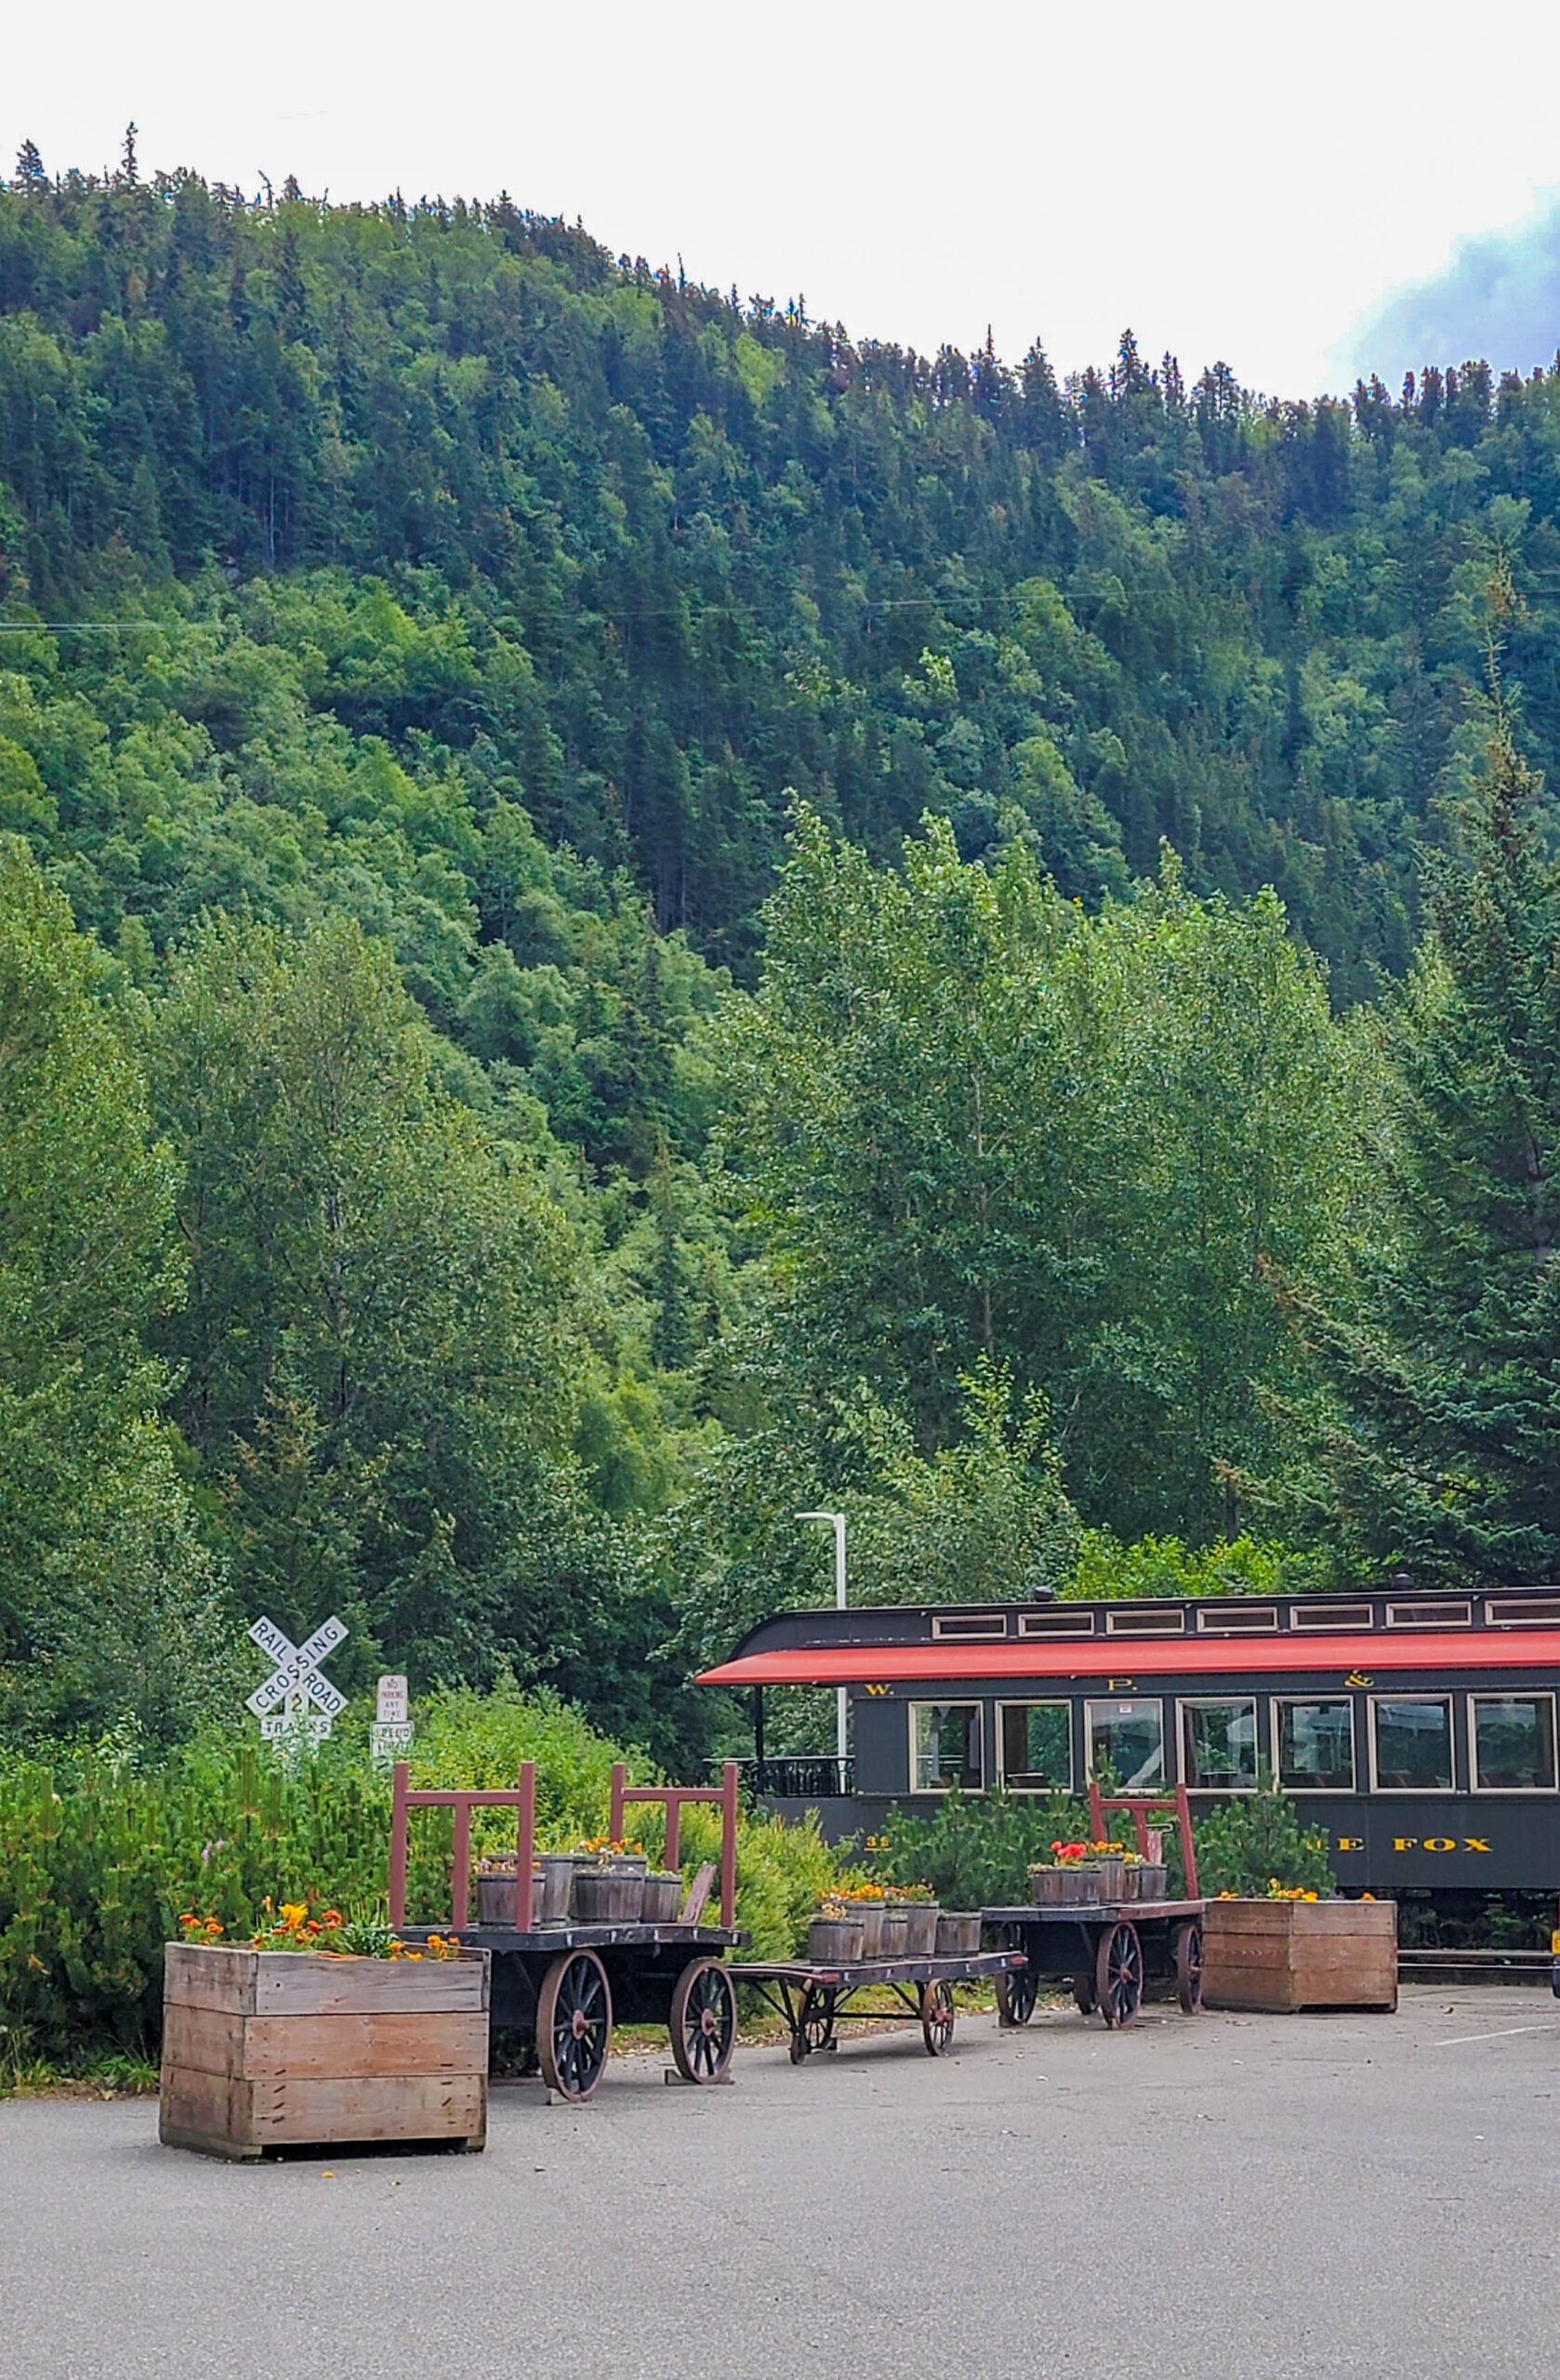 The train takes you all around in Skagway, Alaska